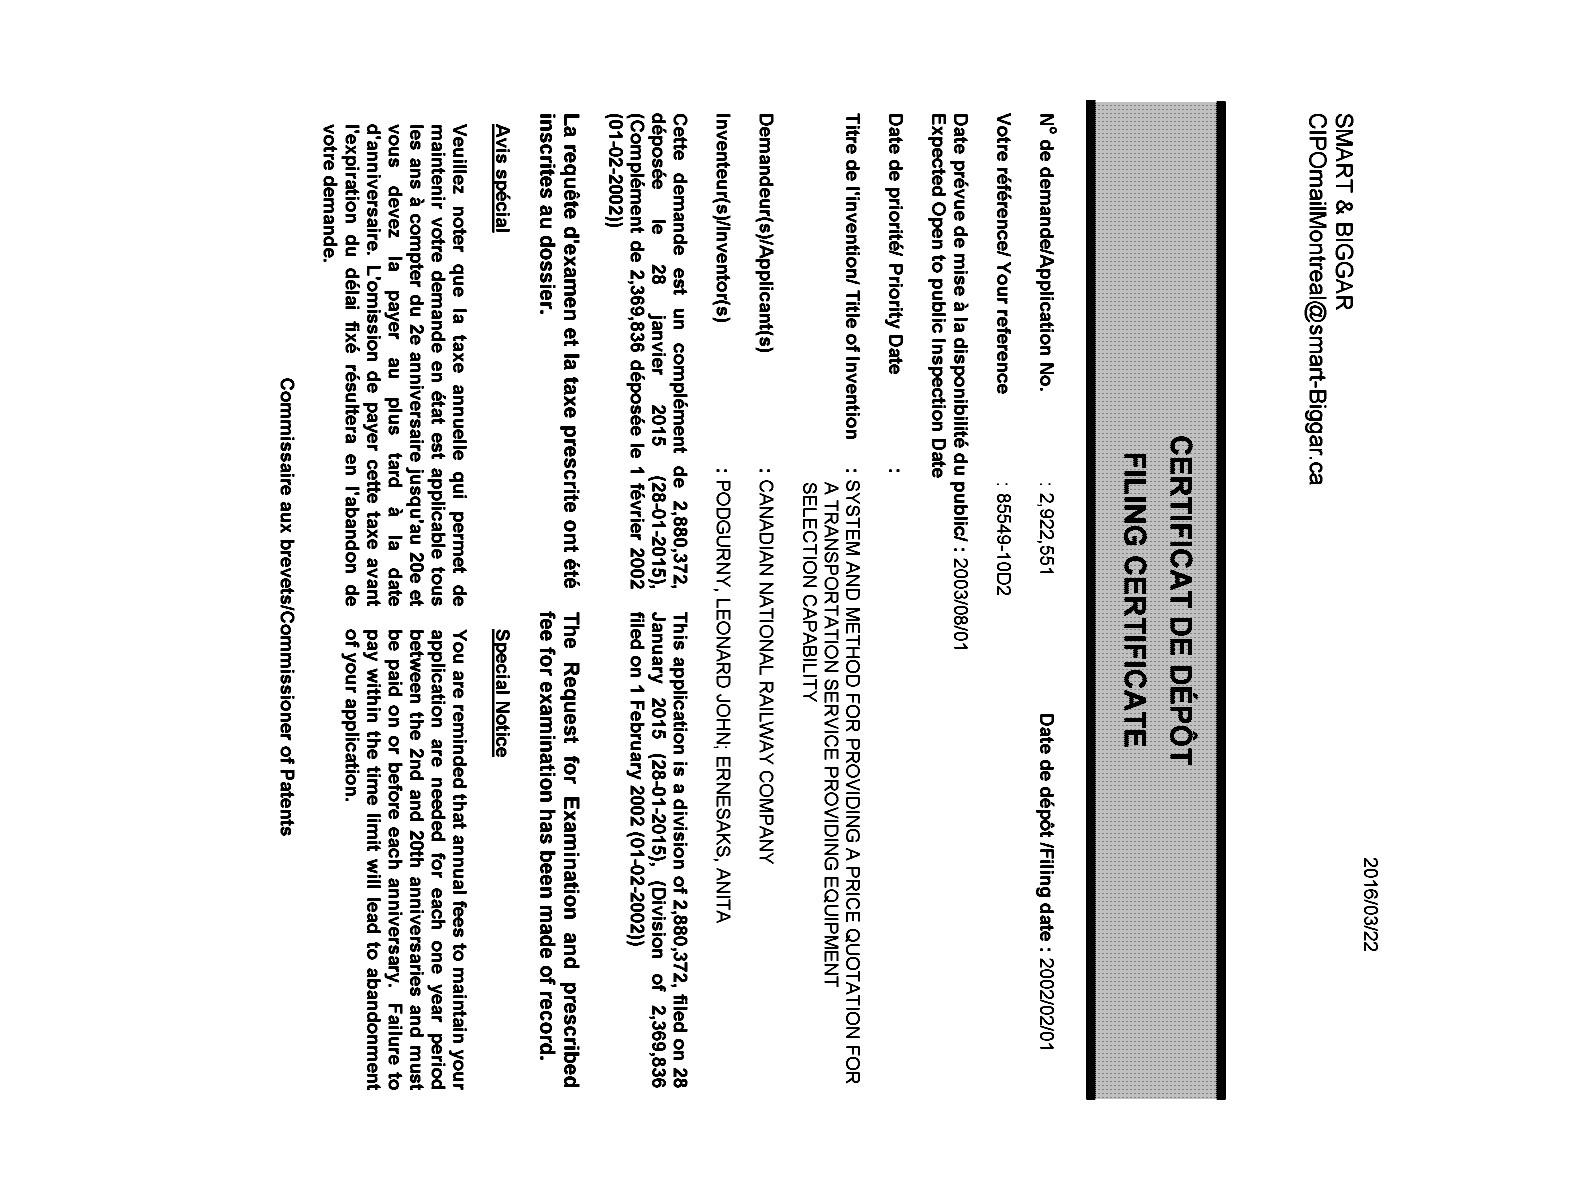 Canadian Patent Document 2922551. Correspondence 20151222. Image 1 of 1